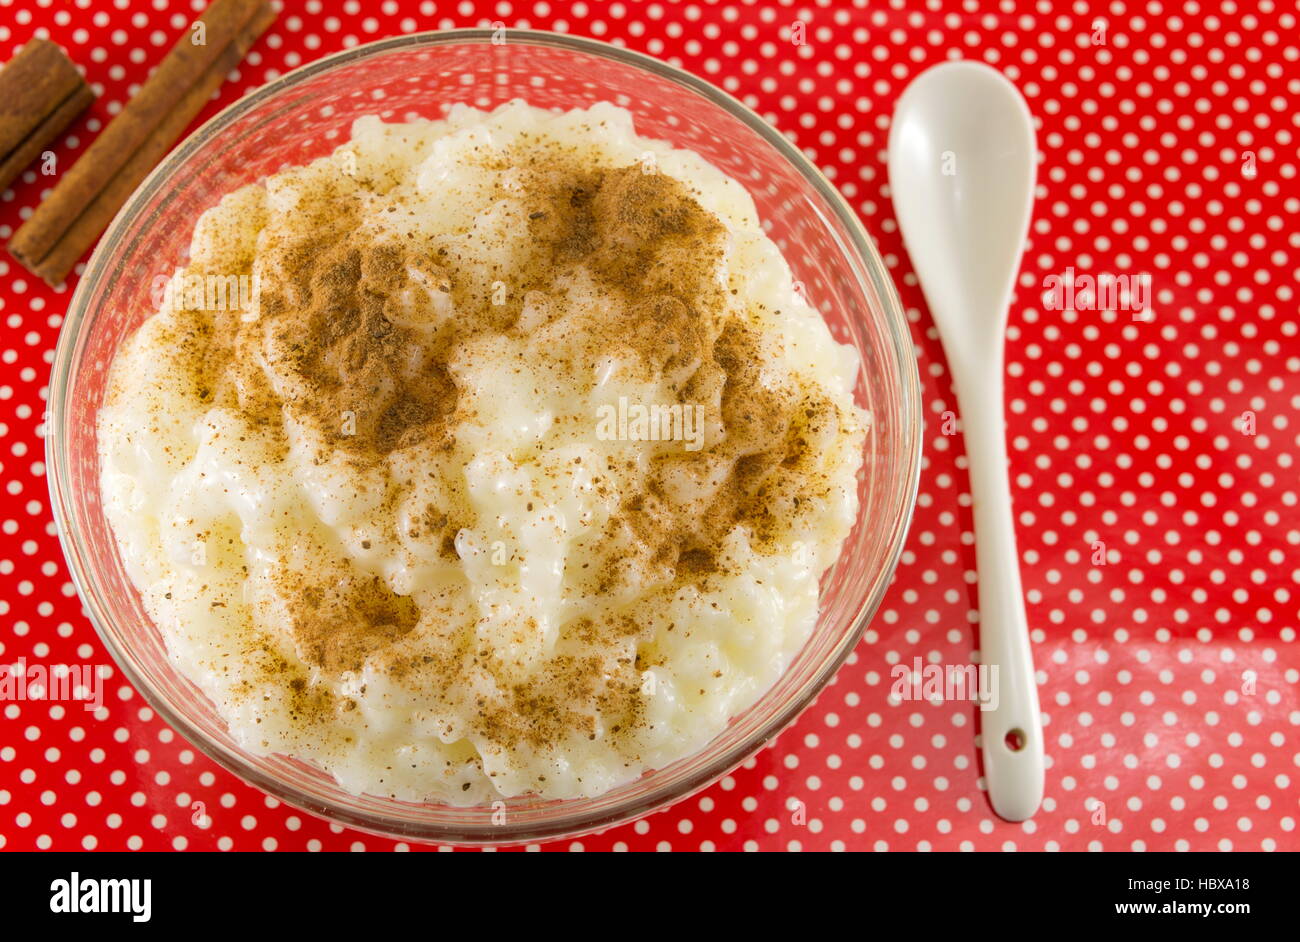 rice milk dessert covered with cinnamon powder Stock Photo